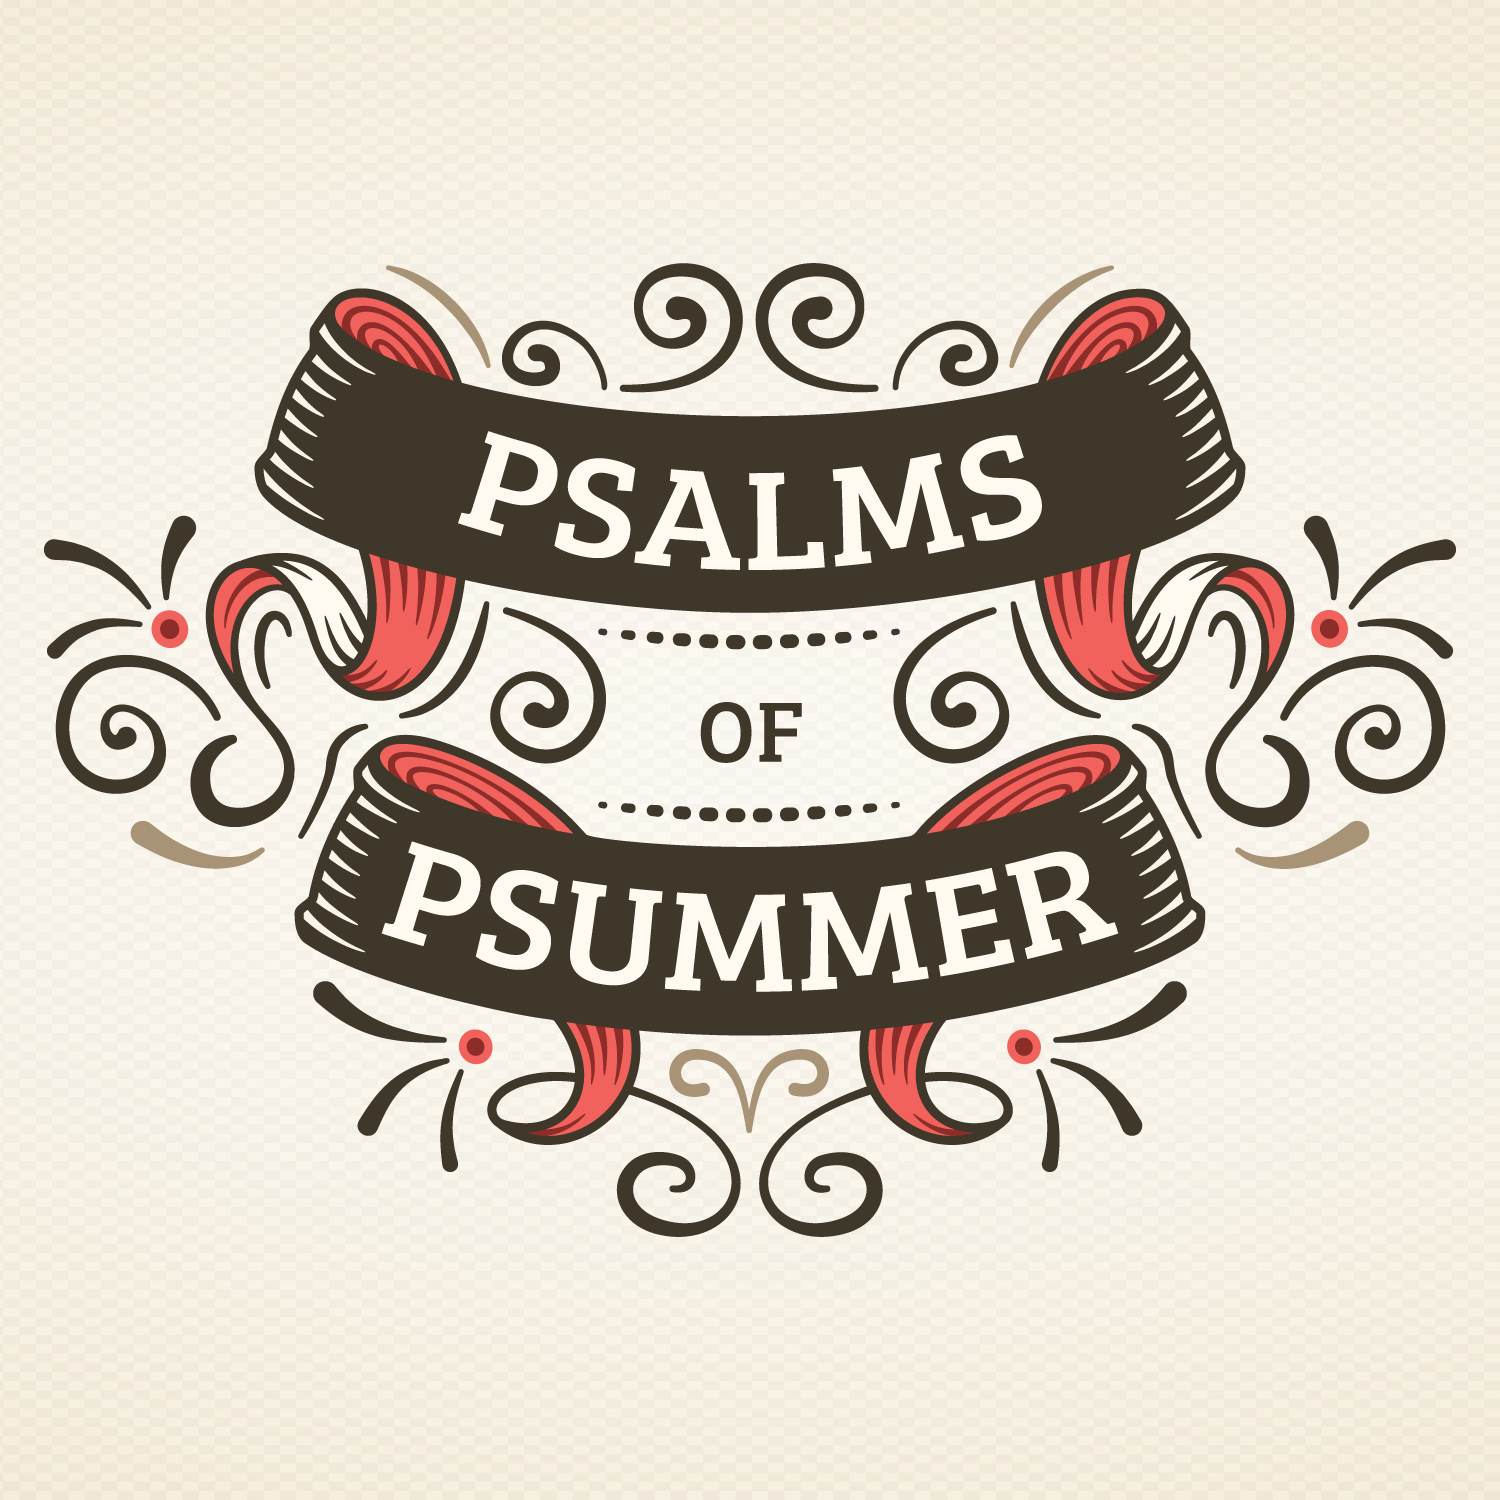 Psalms of Psummer 2: Hallelujah